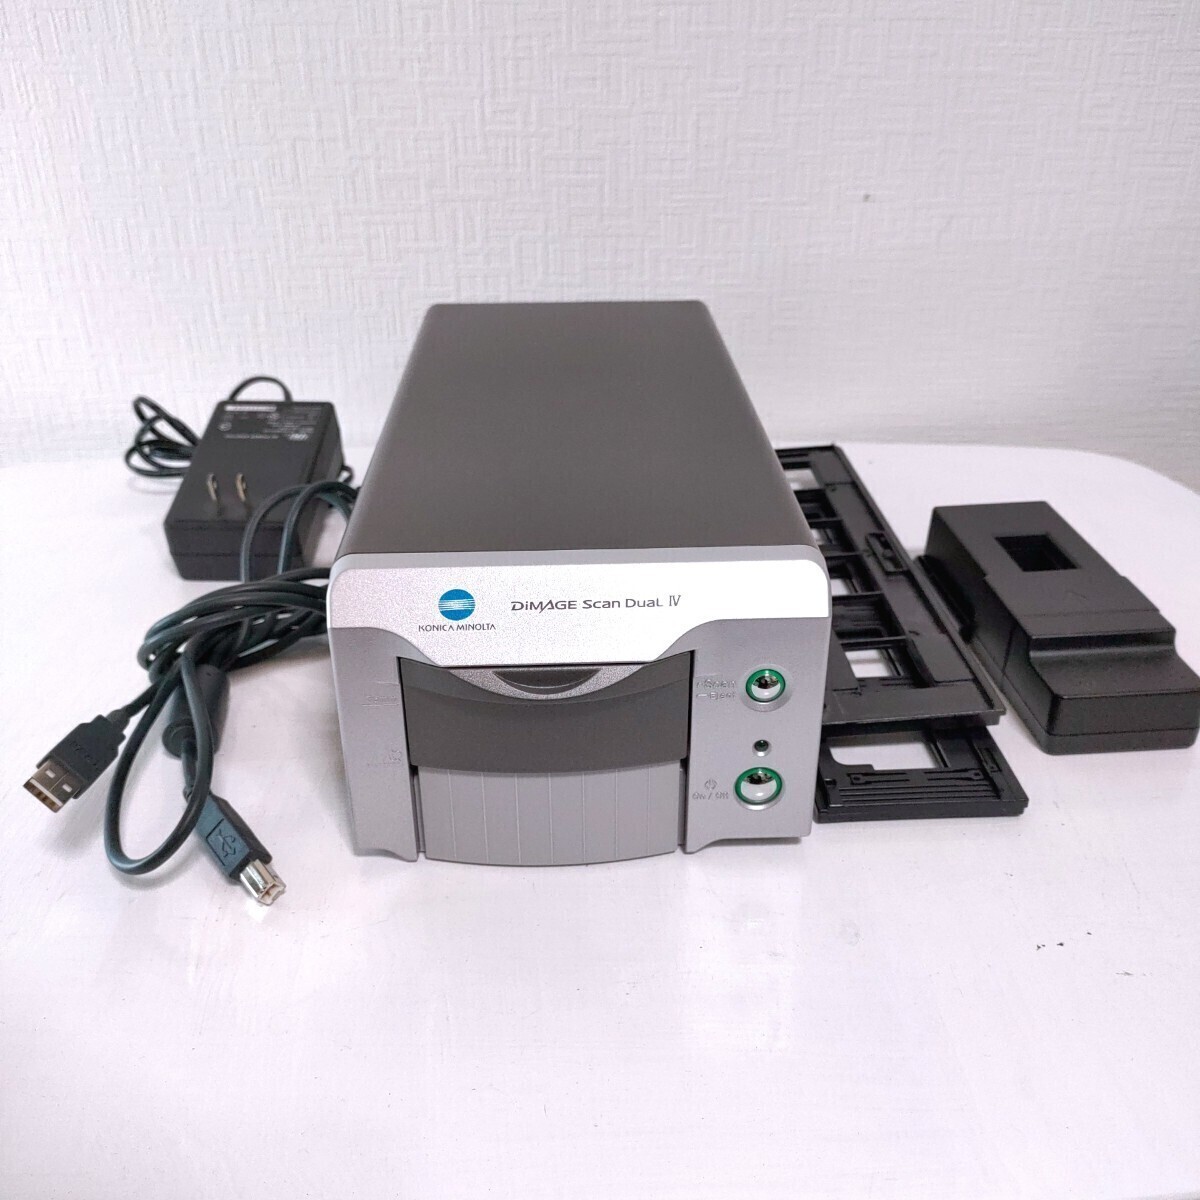 *KONICA MINOLTA DIMAGE Scan Dual IVModel AF-3200 Konica Minolta body +AC adaptor film holder ×2,USB connection code 